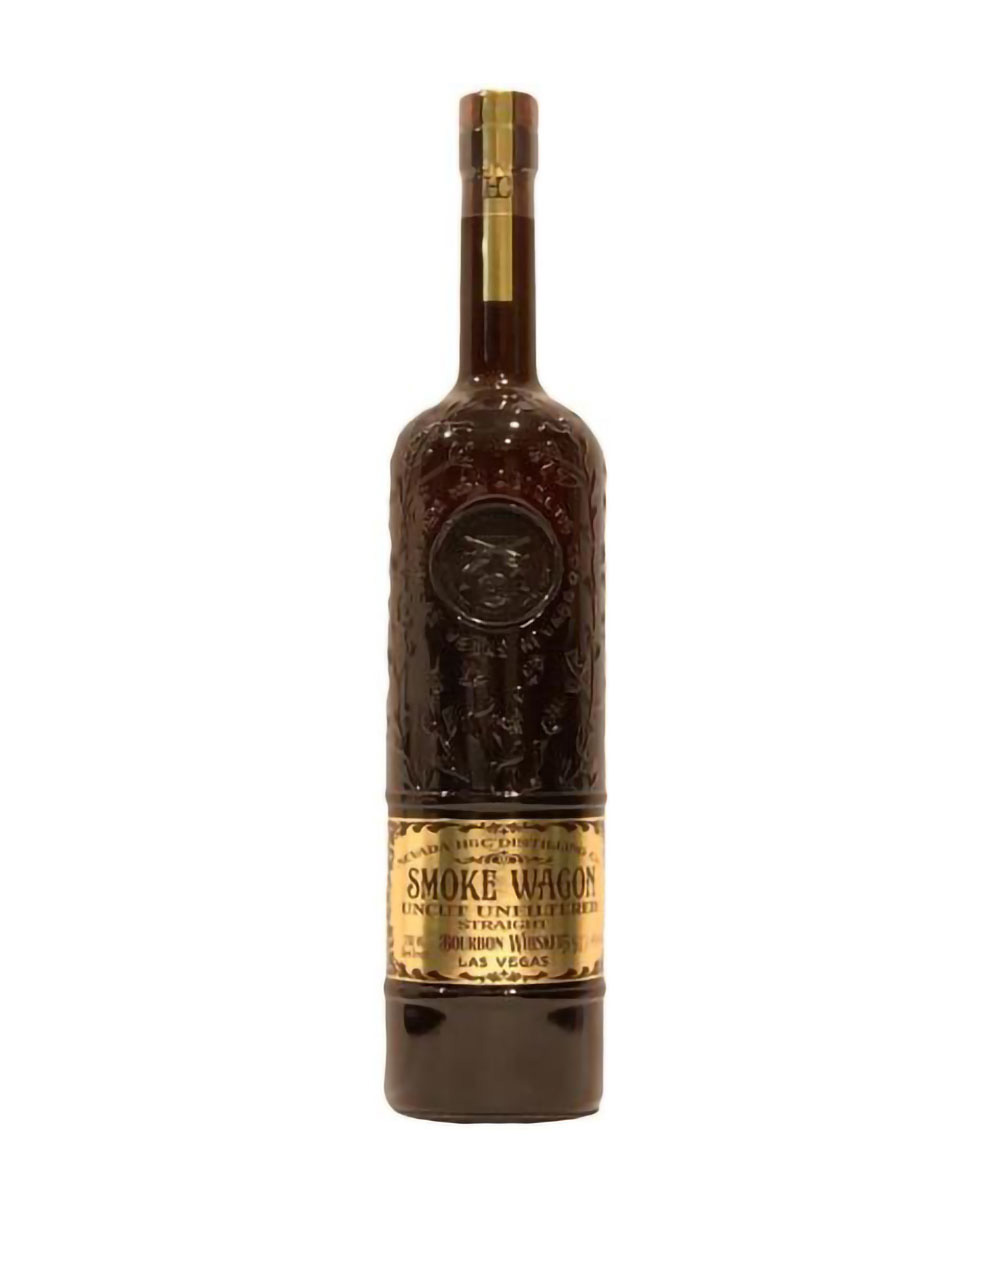 Ardbeg Perpetuum Single Malt Scotch Whisky